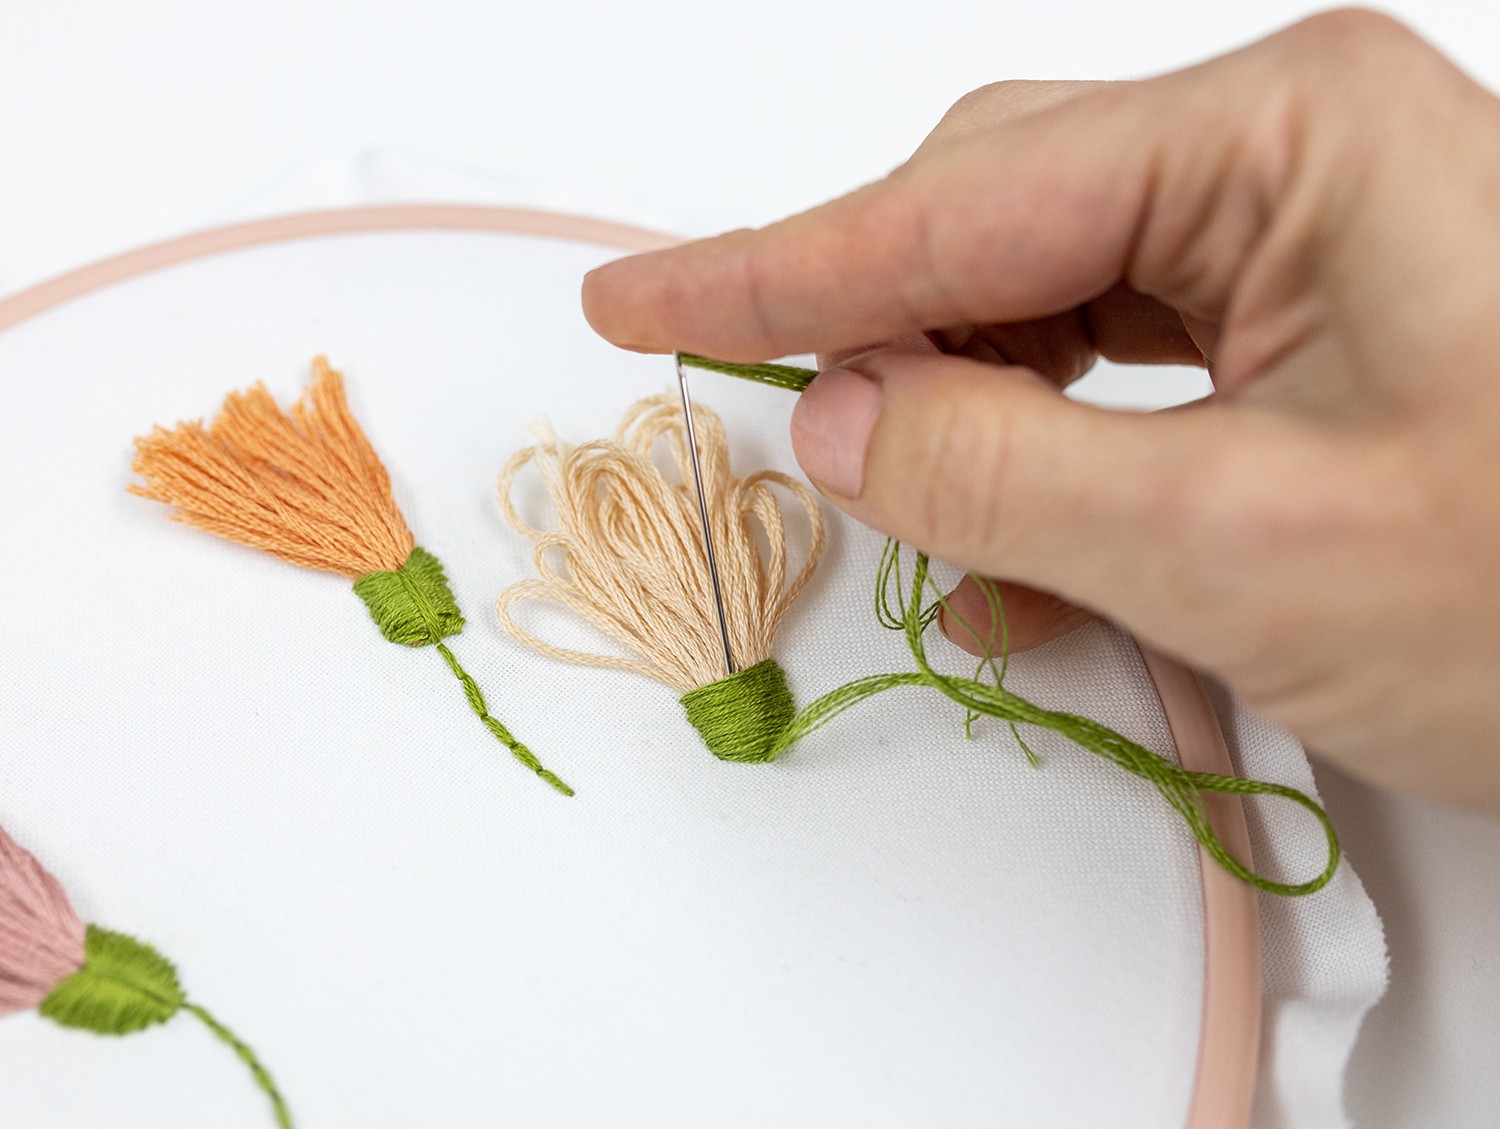 Holding Flowers Embroidery Kit for Beginner, Modern Floral